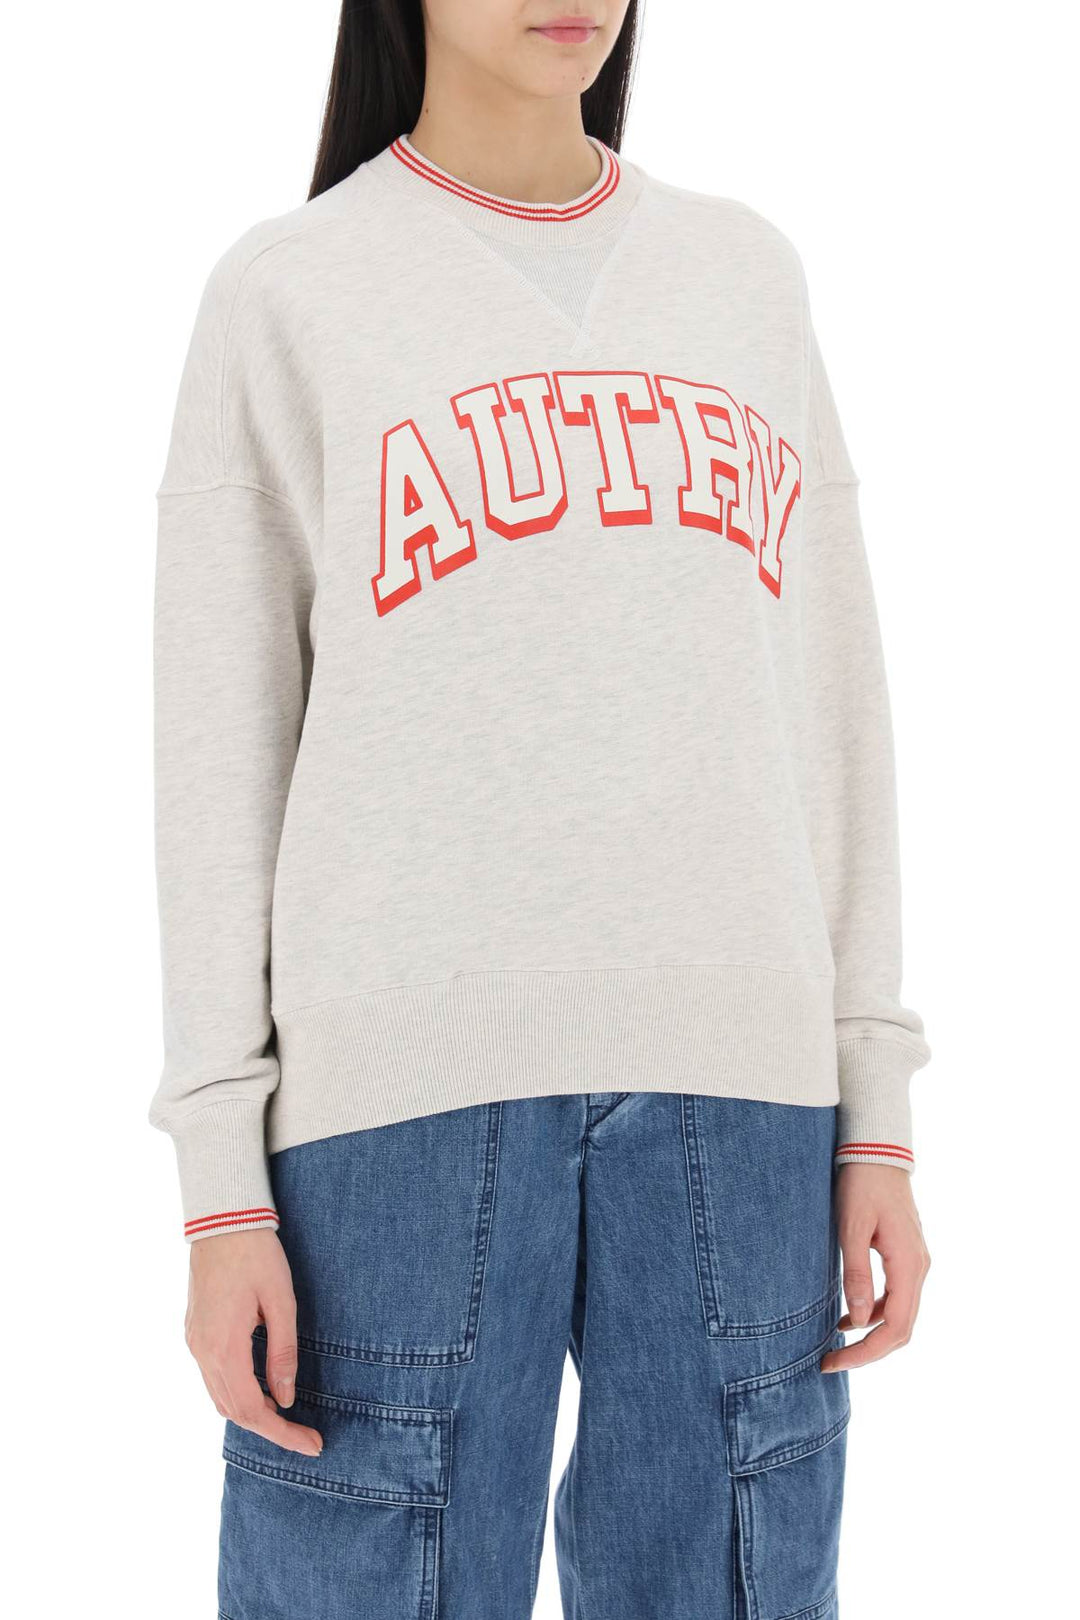 Autry Oversized Varsity Sweatshirt   Grigio